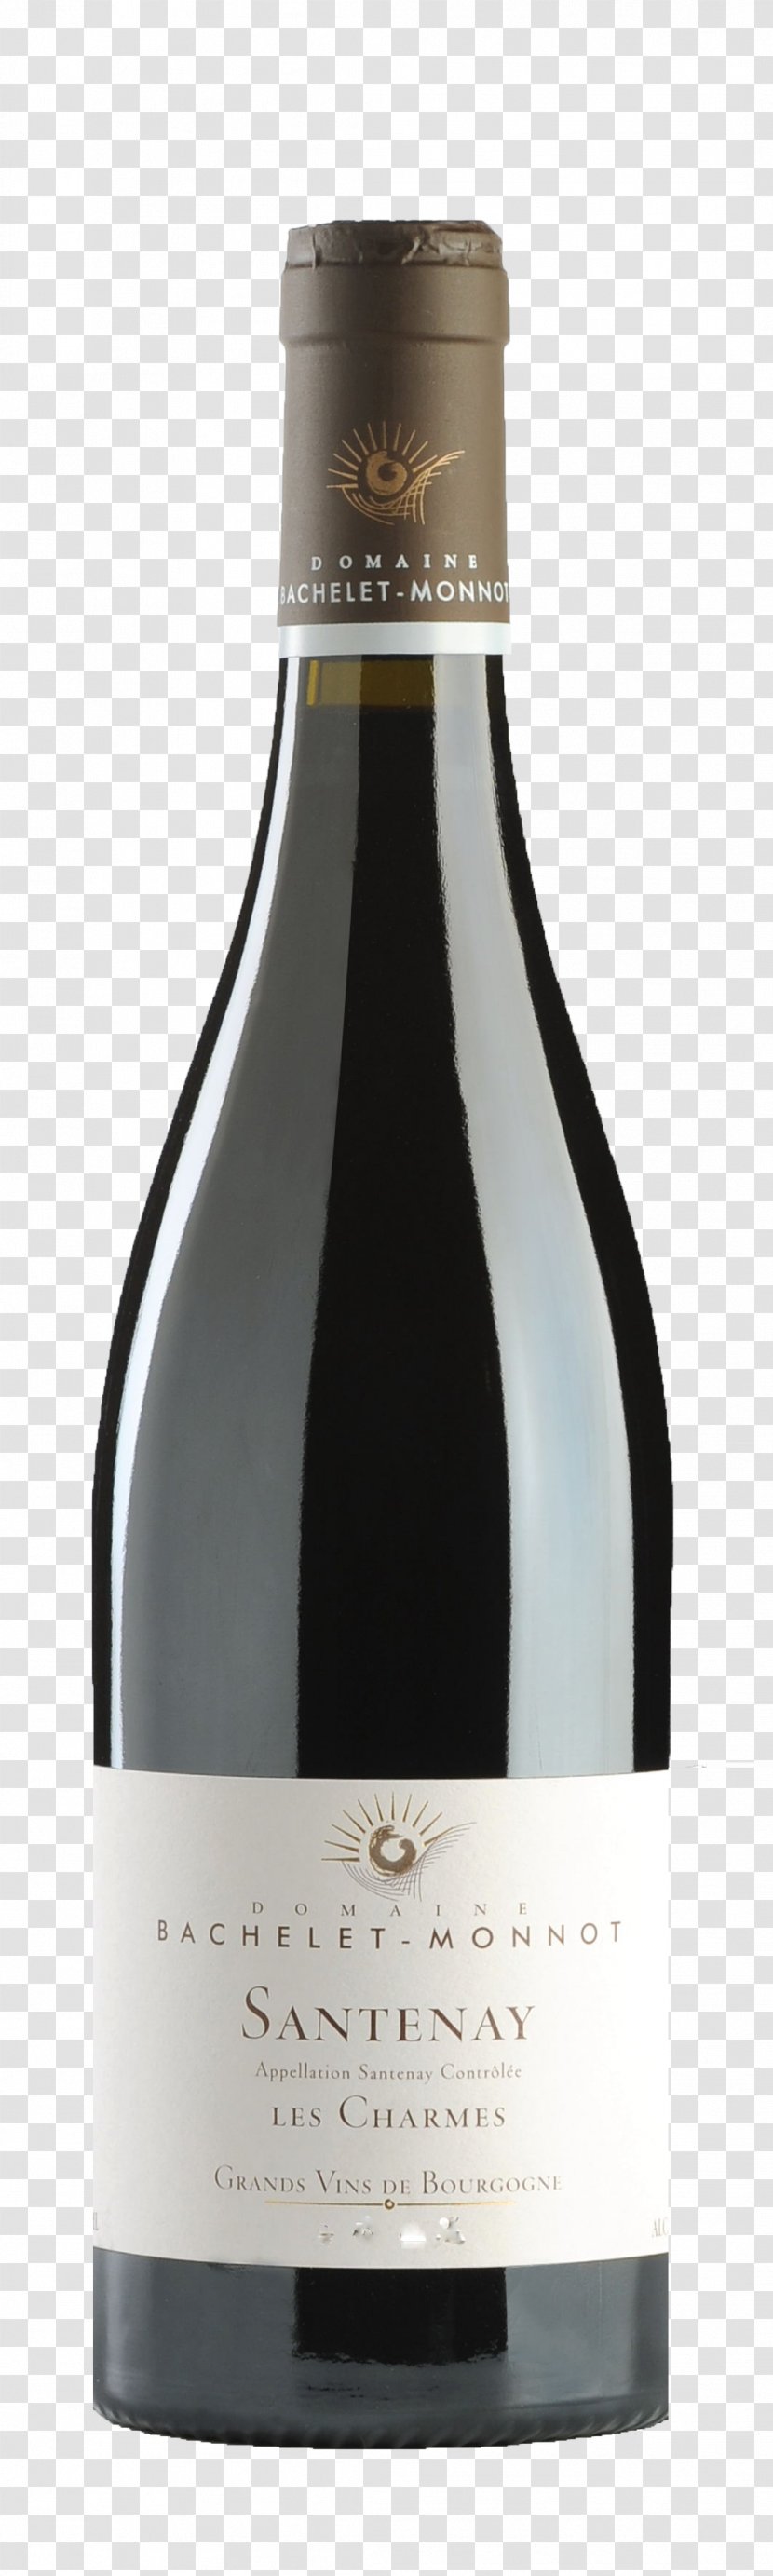 Champagne Domaine Bachelet-Monnot Santenay Wine Charmes Transparent PNG